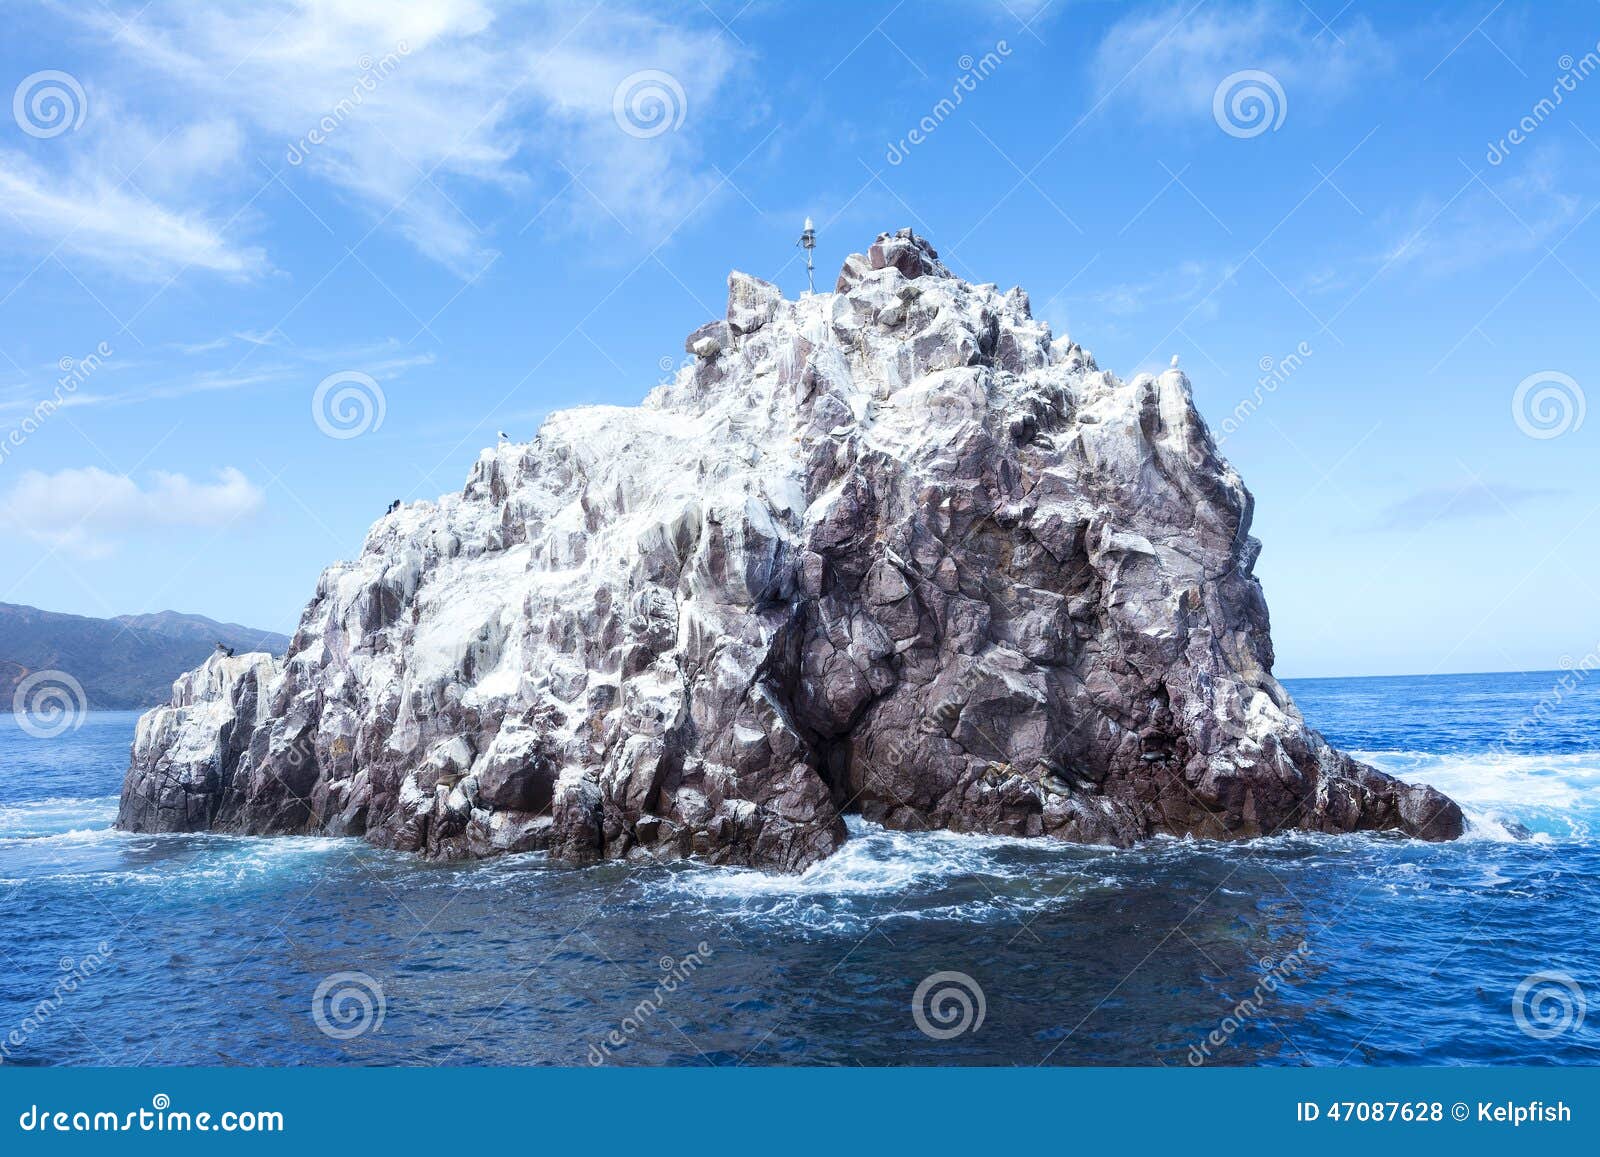 ship rock catalina island